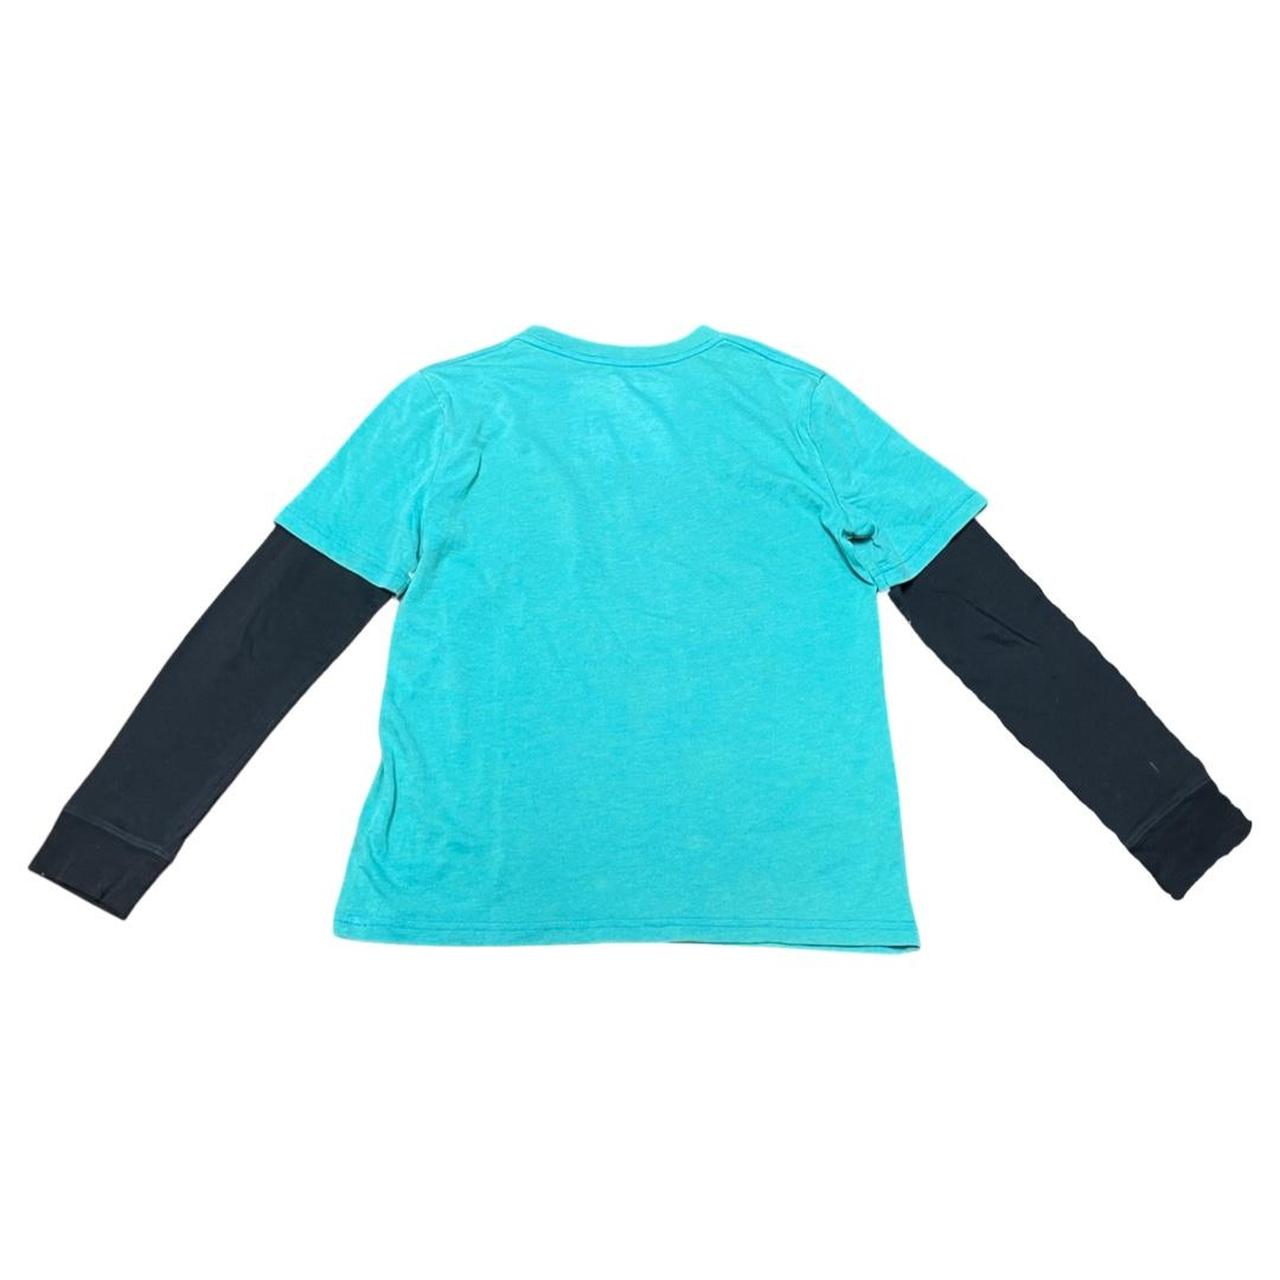 Hybrid Apparel Black and Blue Shirt (4)